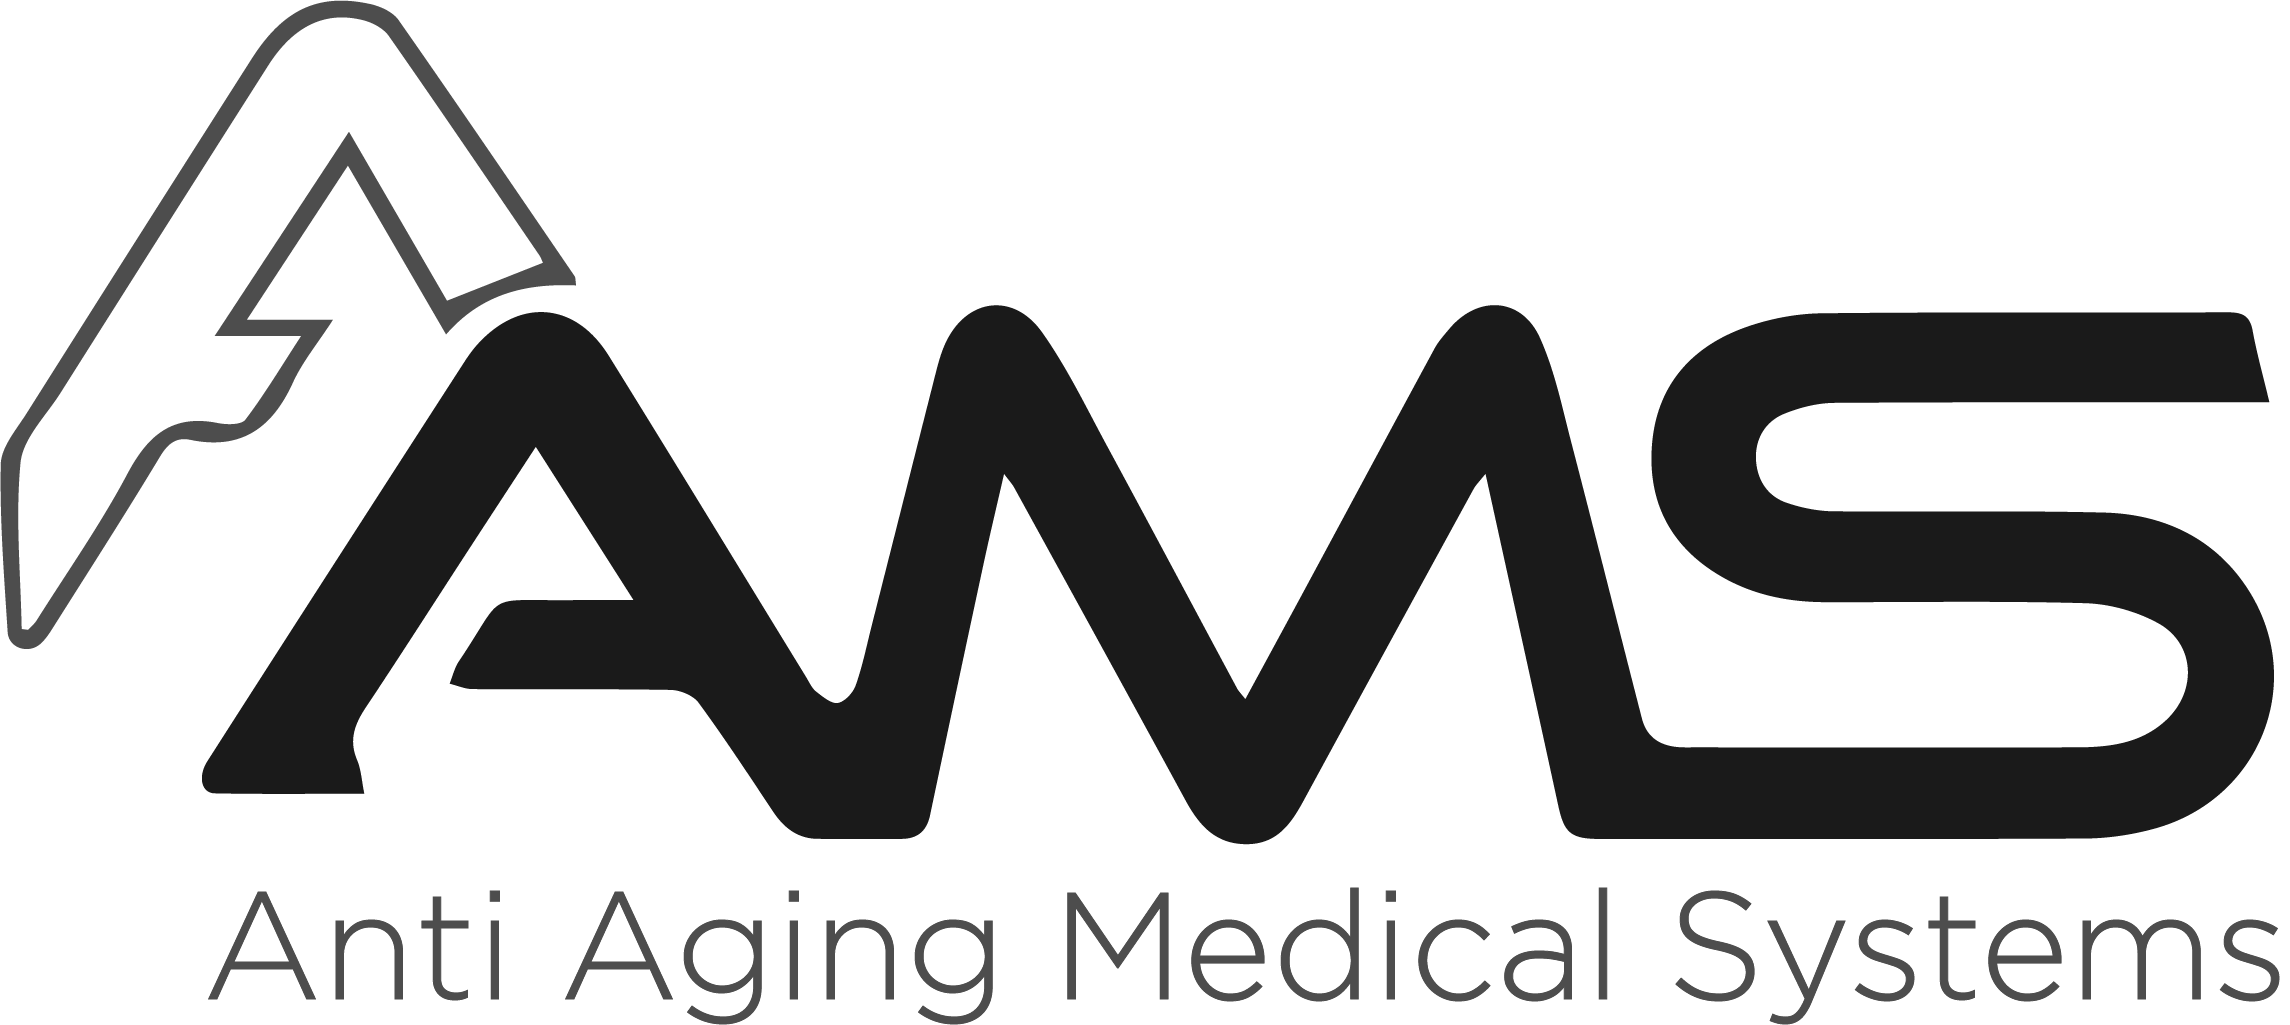 aams logo - APALIS BIOMEDICAL